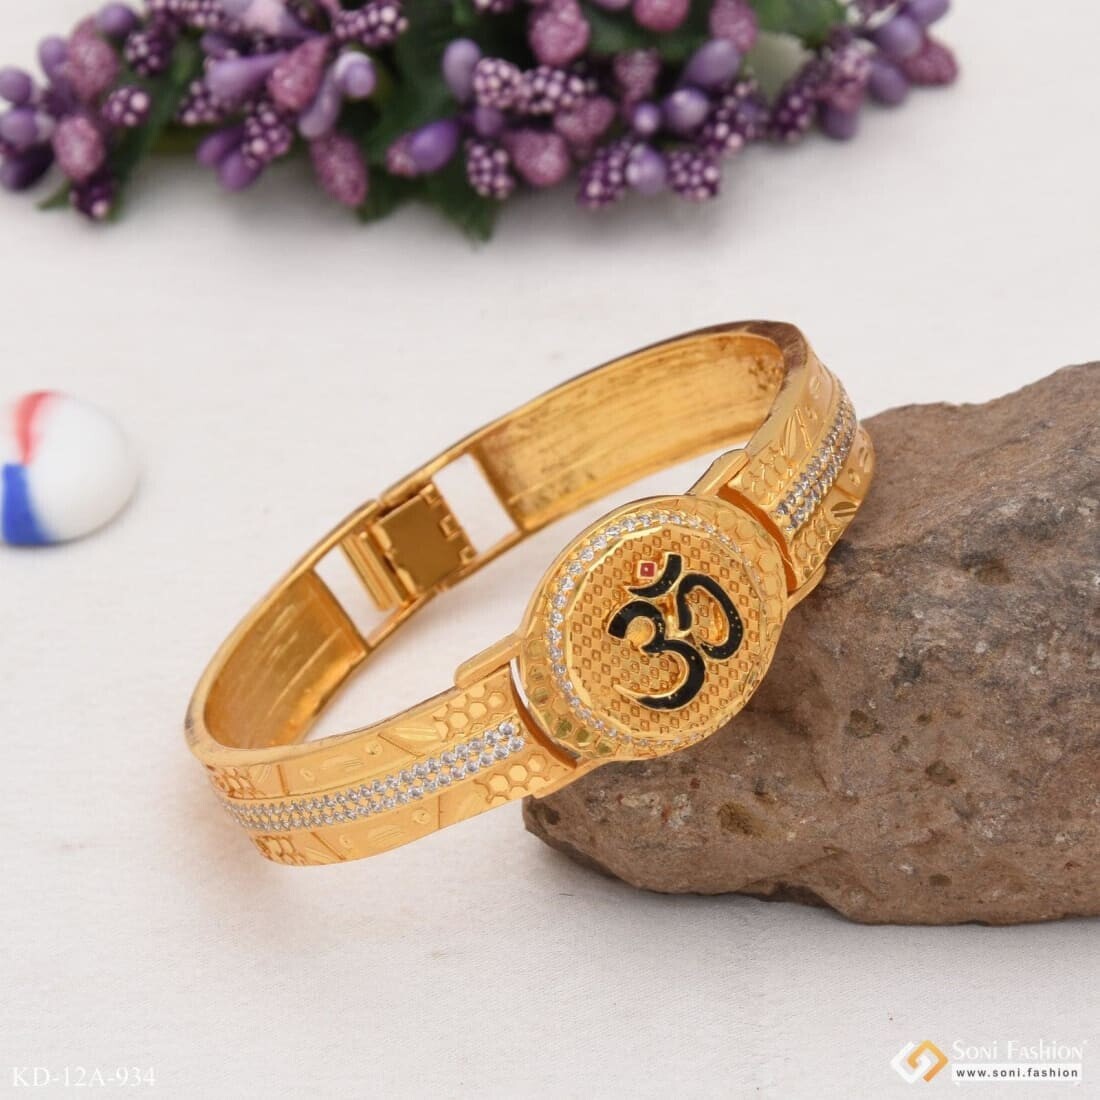 bronze cow leather diy bracelets supplier| Alibaba.com